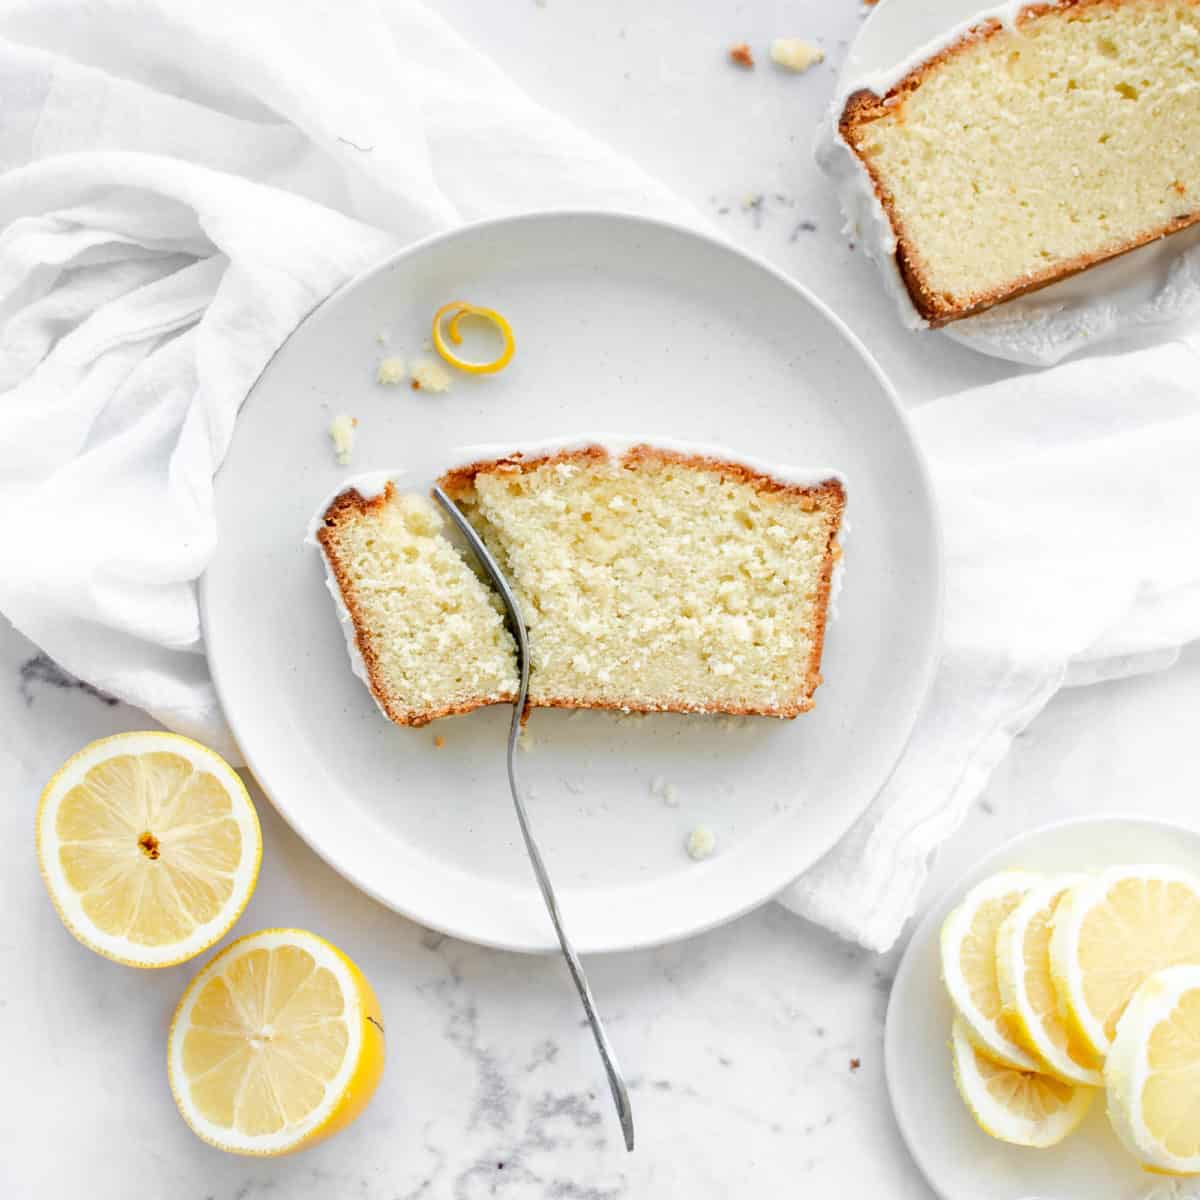 A slice of lemon pound cake on a plate with a fork.